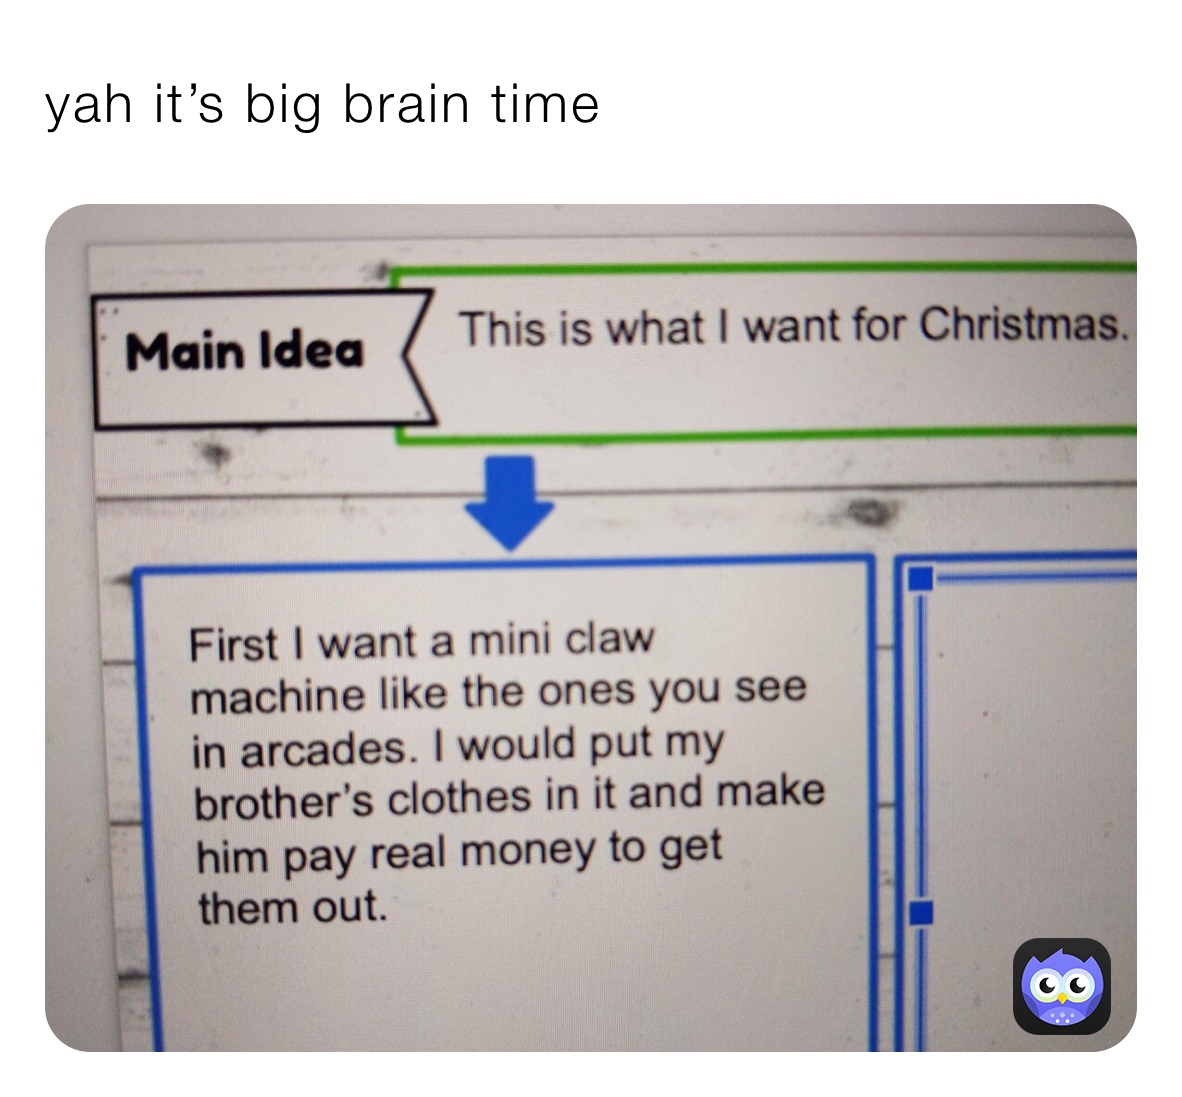 yah it’s big brain time